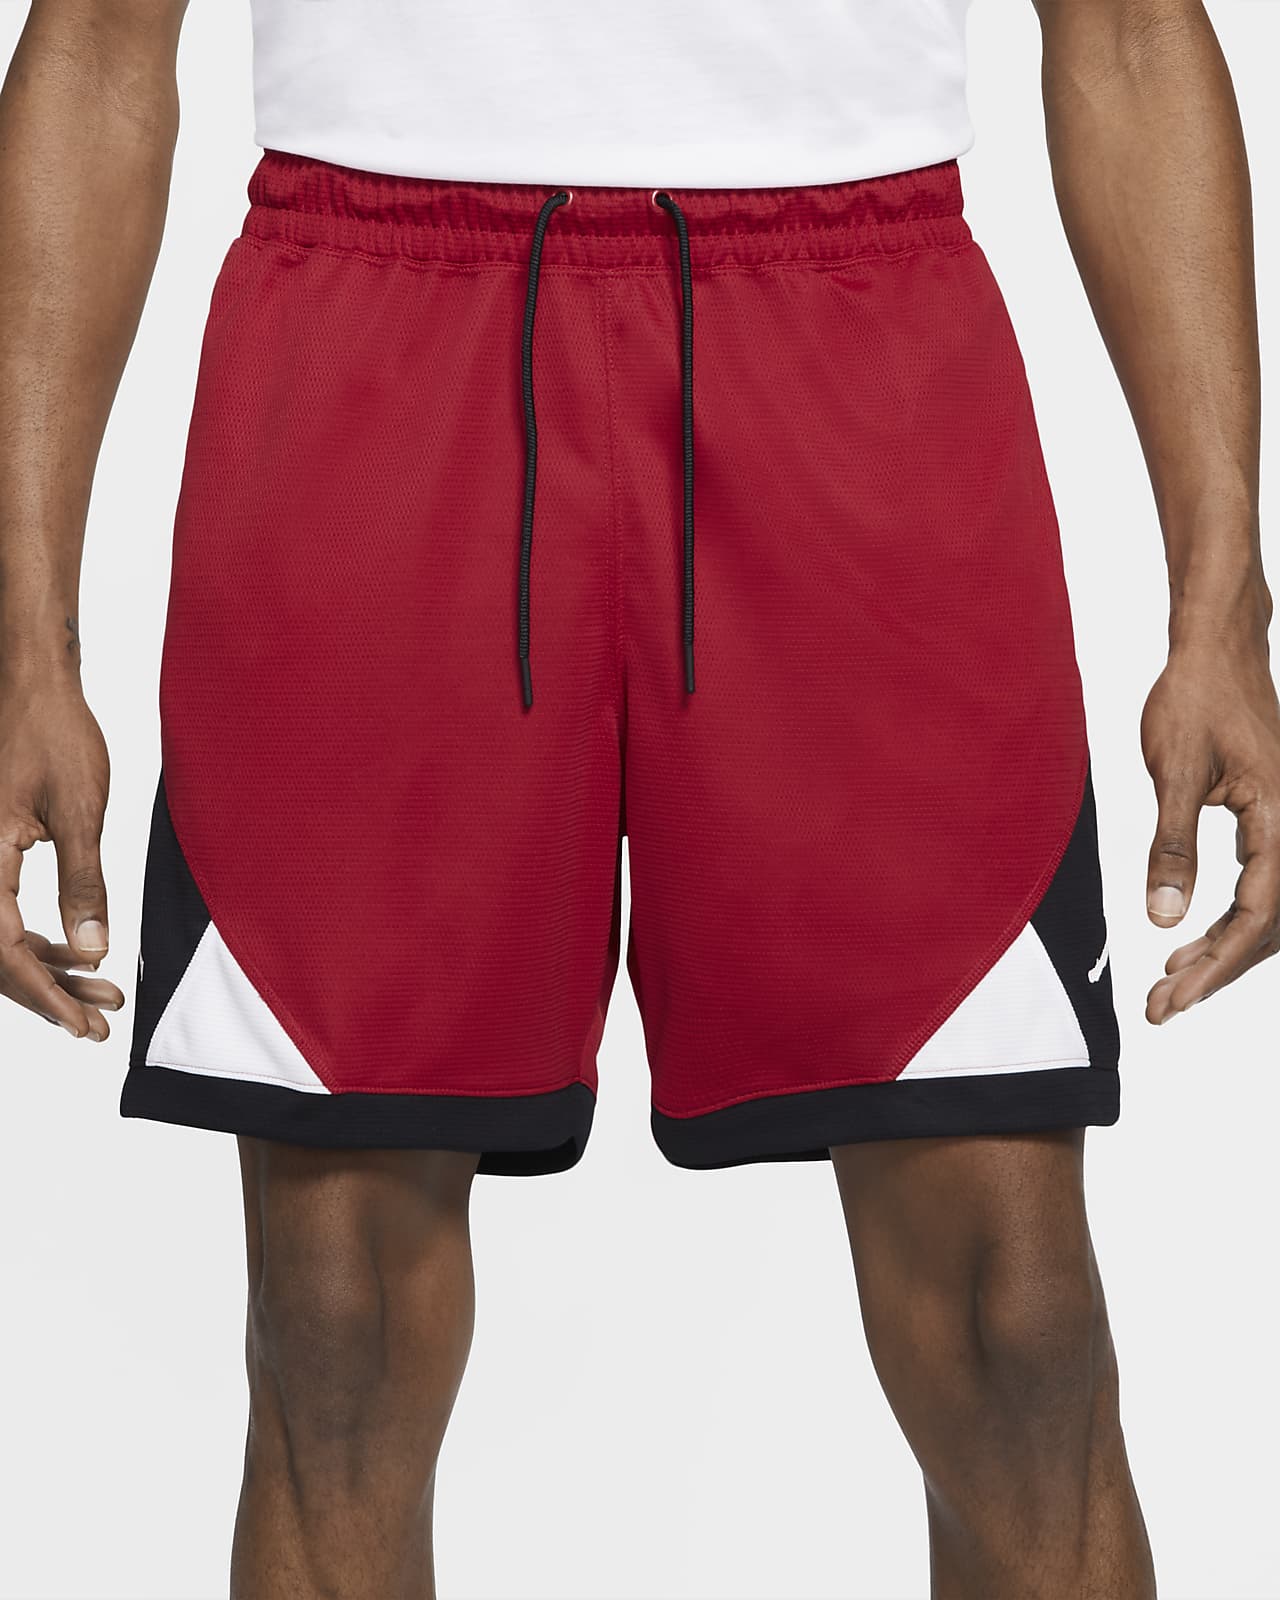 Buy > nike shorts jordan > in stock